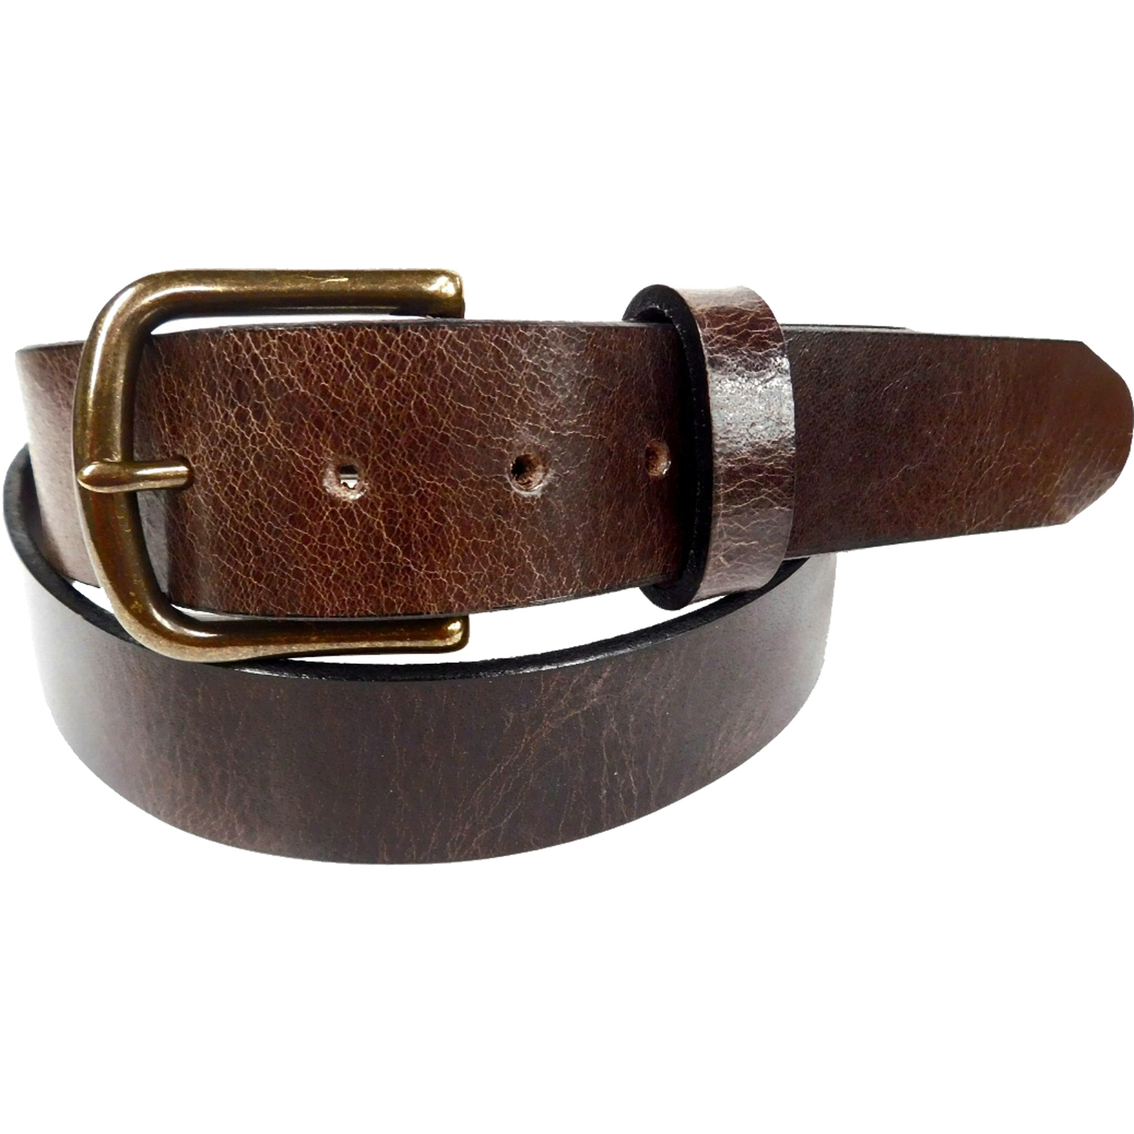 Surtan Mfg. Brass Buckle Leather Belt | Belts | Clothing & Accessories ...